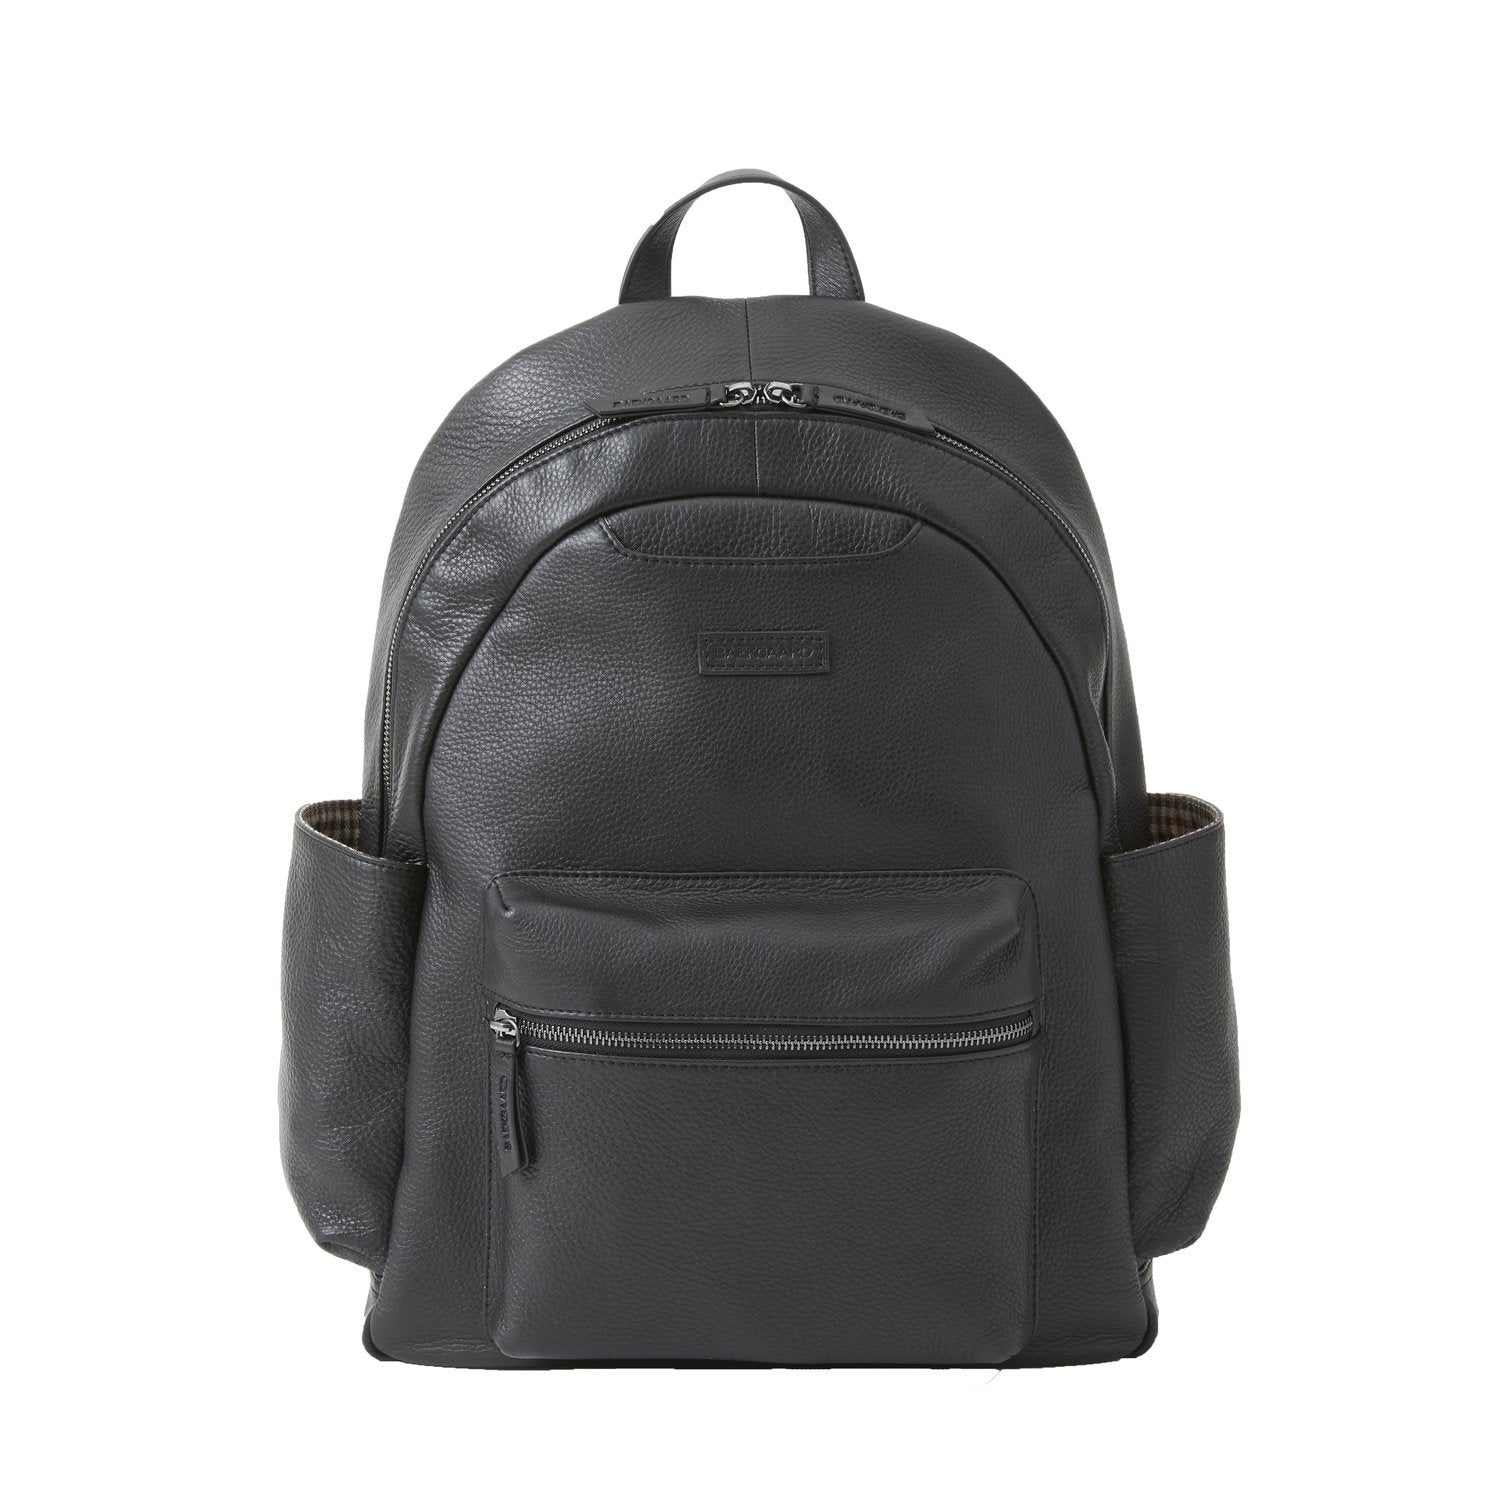 Clark Backpack in Black Leather by Baekgaard